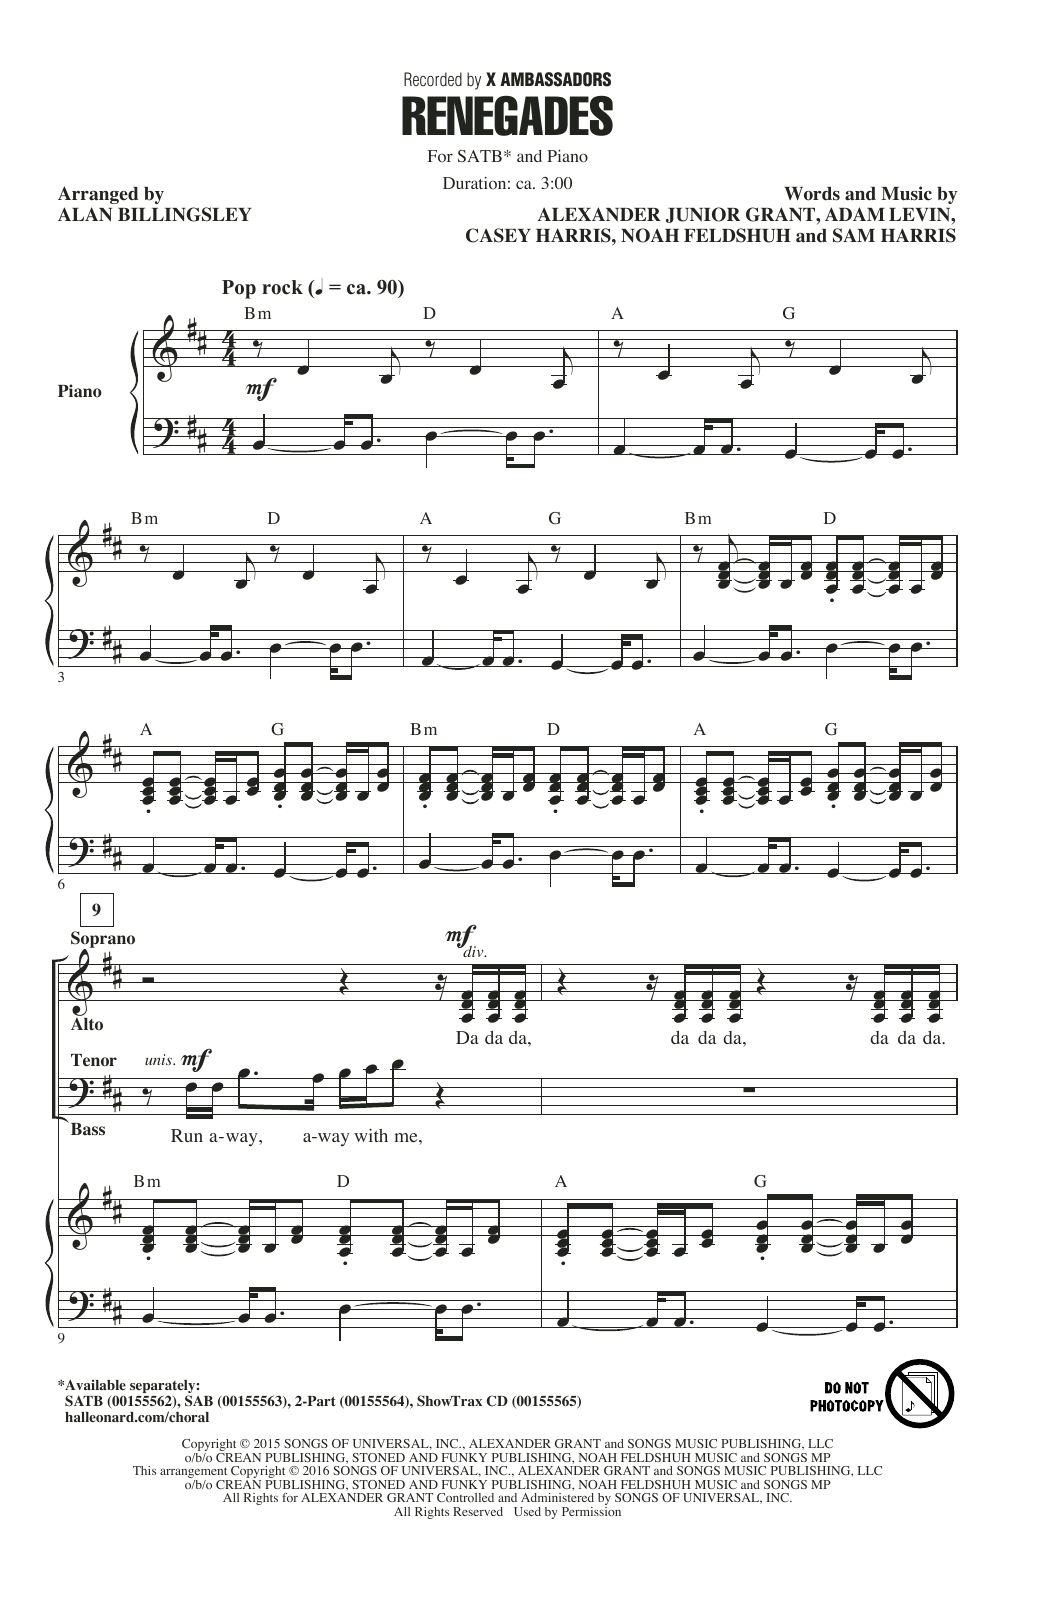 X Ambassadors Renegades (arr. Alan Billingsley) Sheet Music Notes & Chords for 2-Part Choir - Download or Print PDF